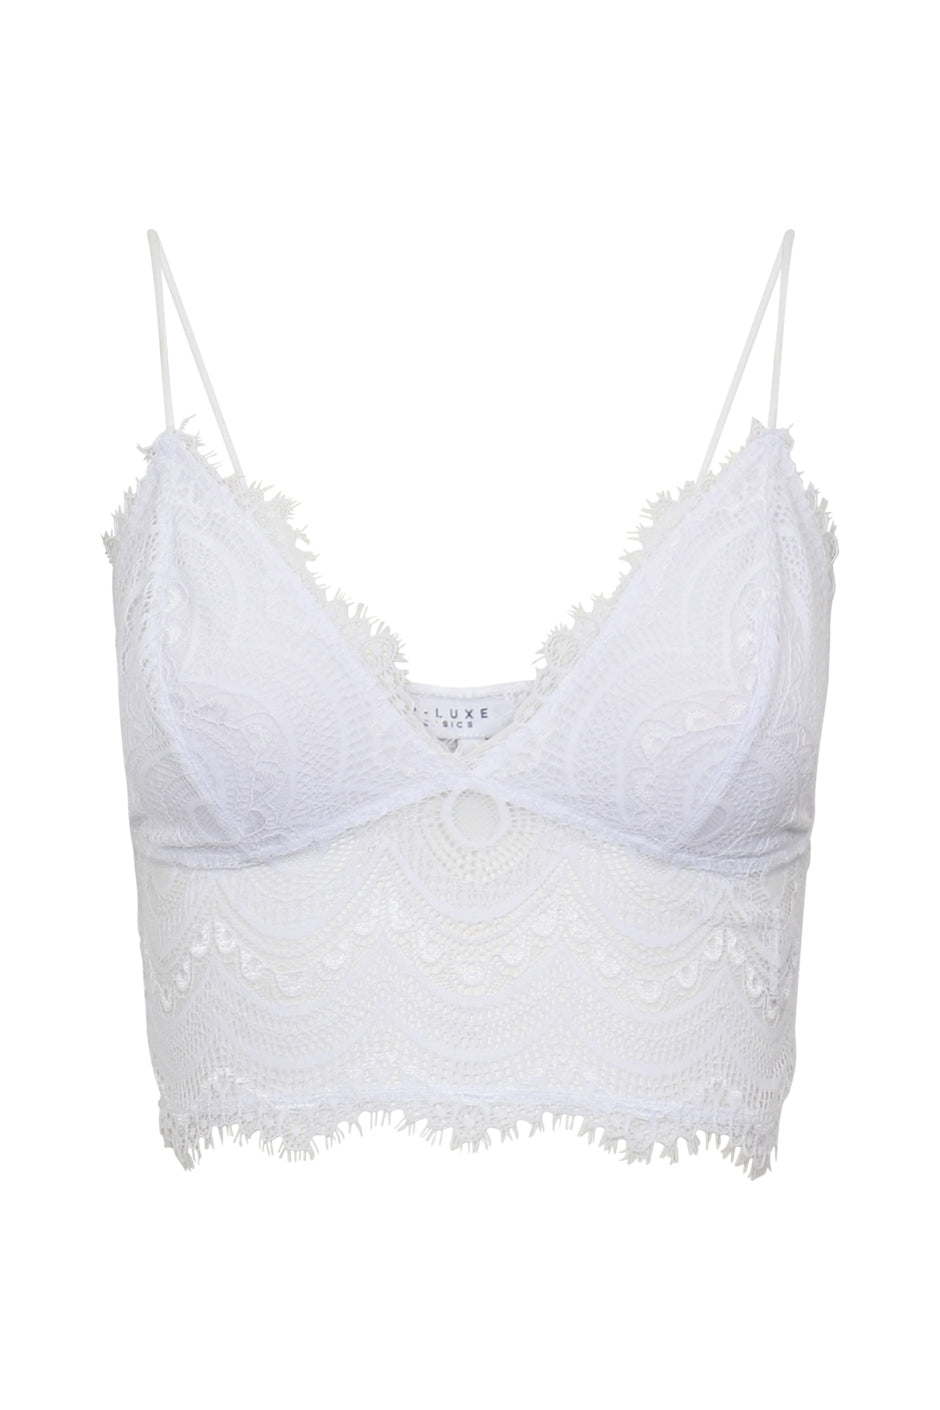 D-Luxe Lace Bralette — Bright White